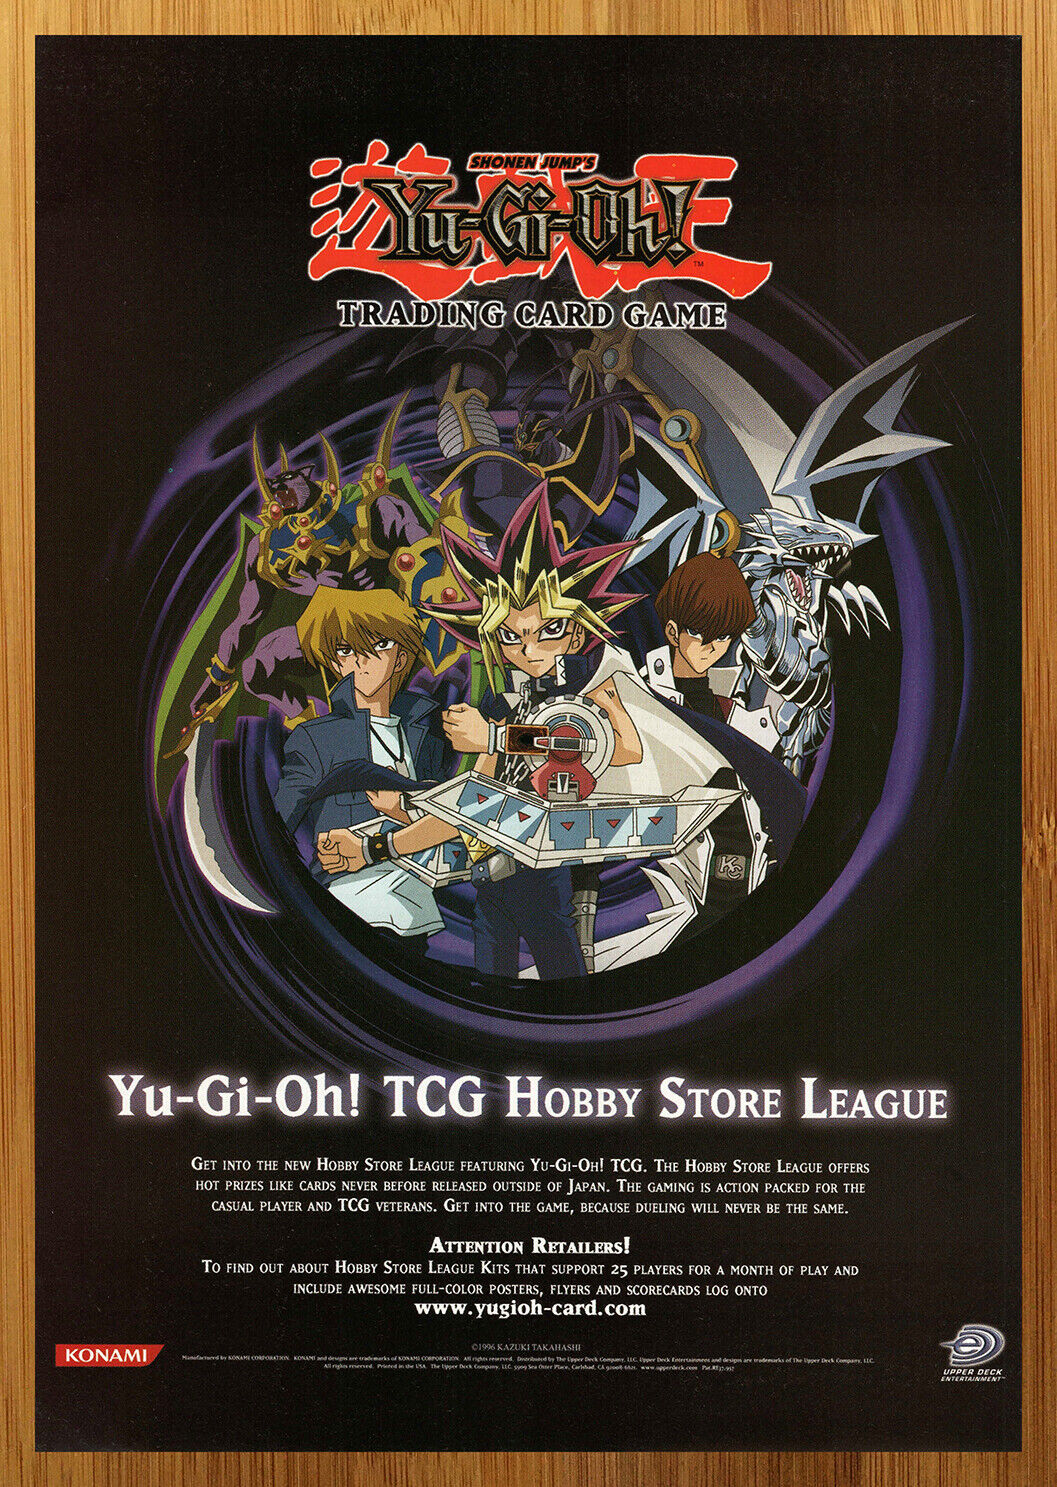 2004 Yu-Gi-Oh TCG Trading Cards Vintage Print Ad/Poster Hobby League Promo Art 